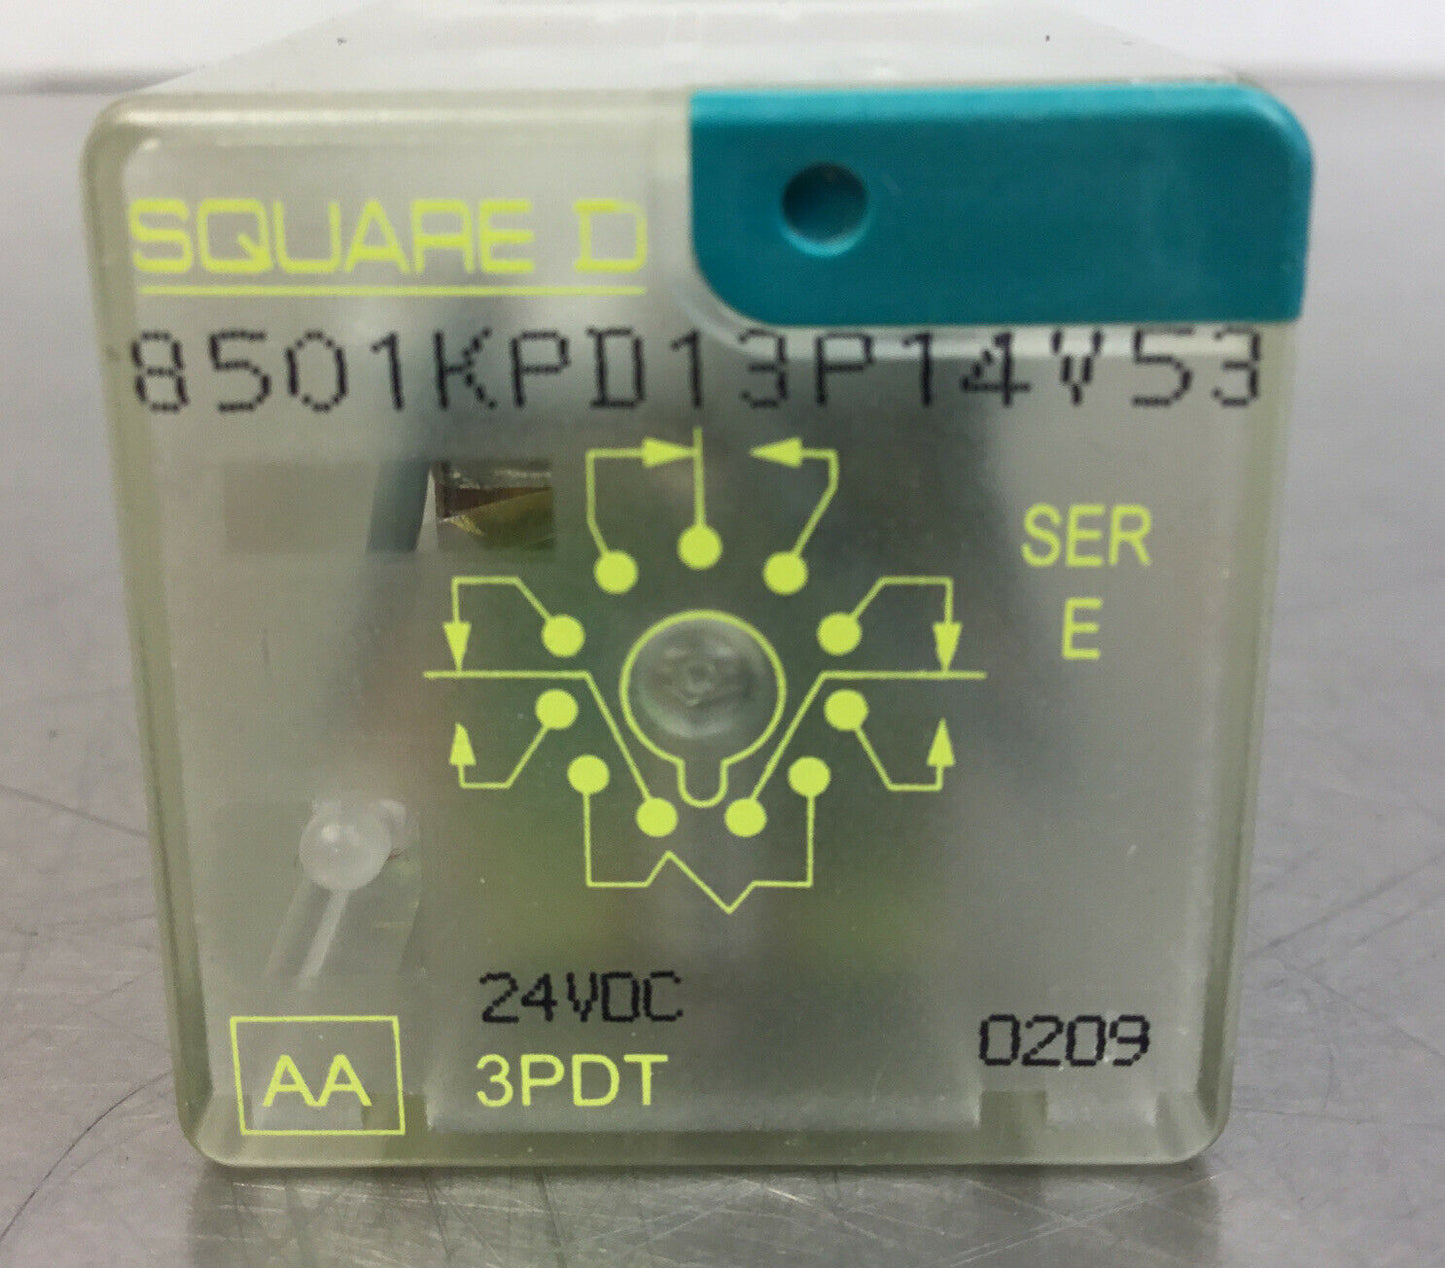 Square D 8501KPD13P14V53 /E 24 VDC Coil Relay   5E